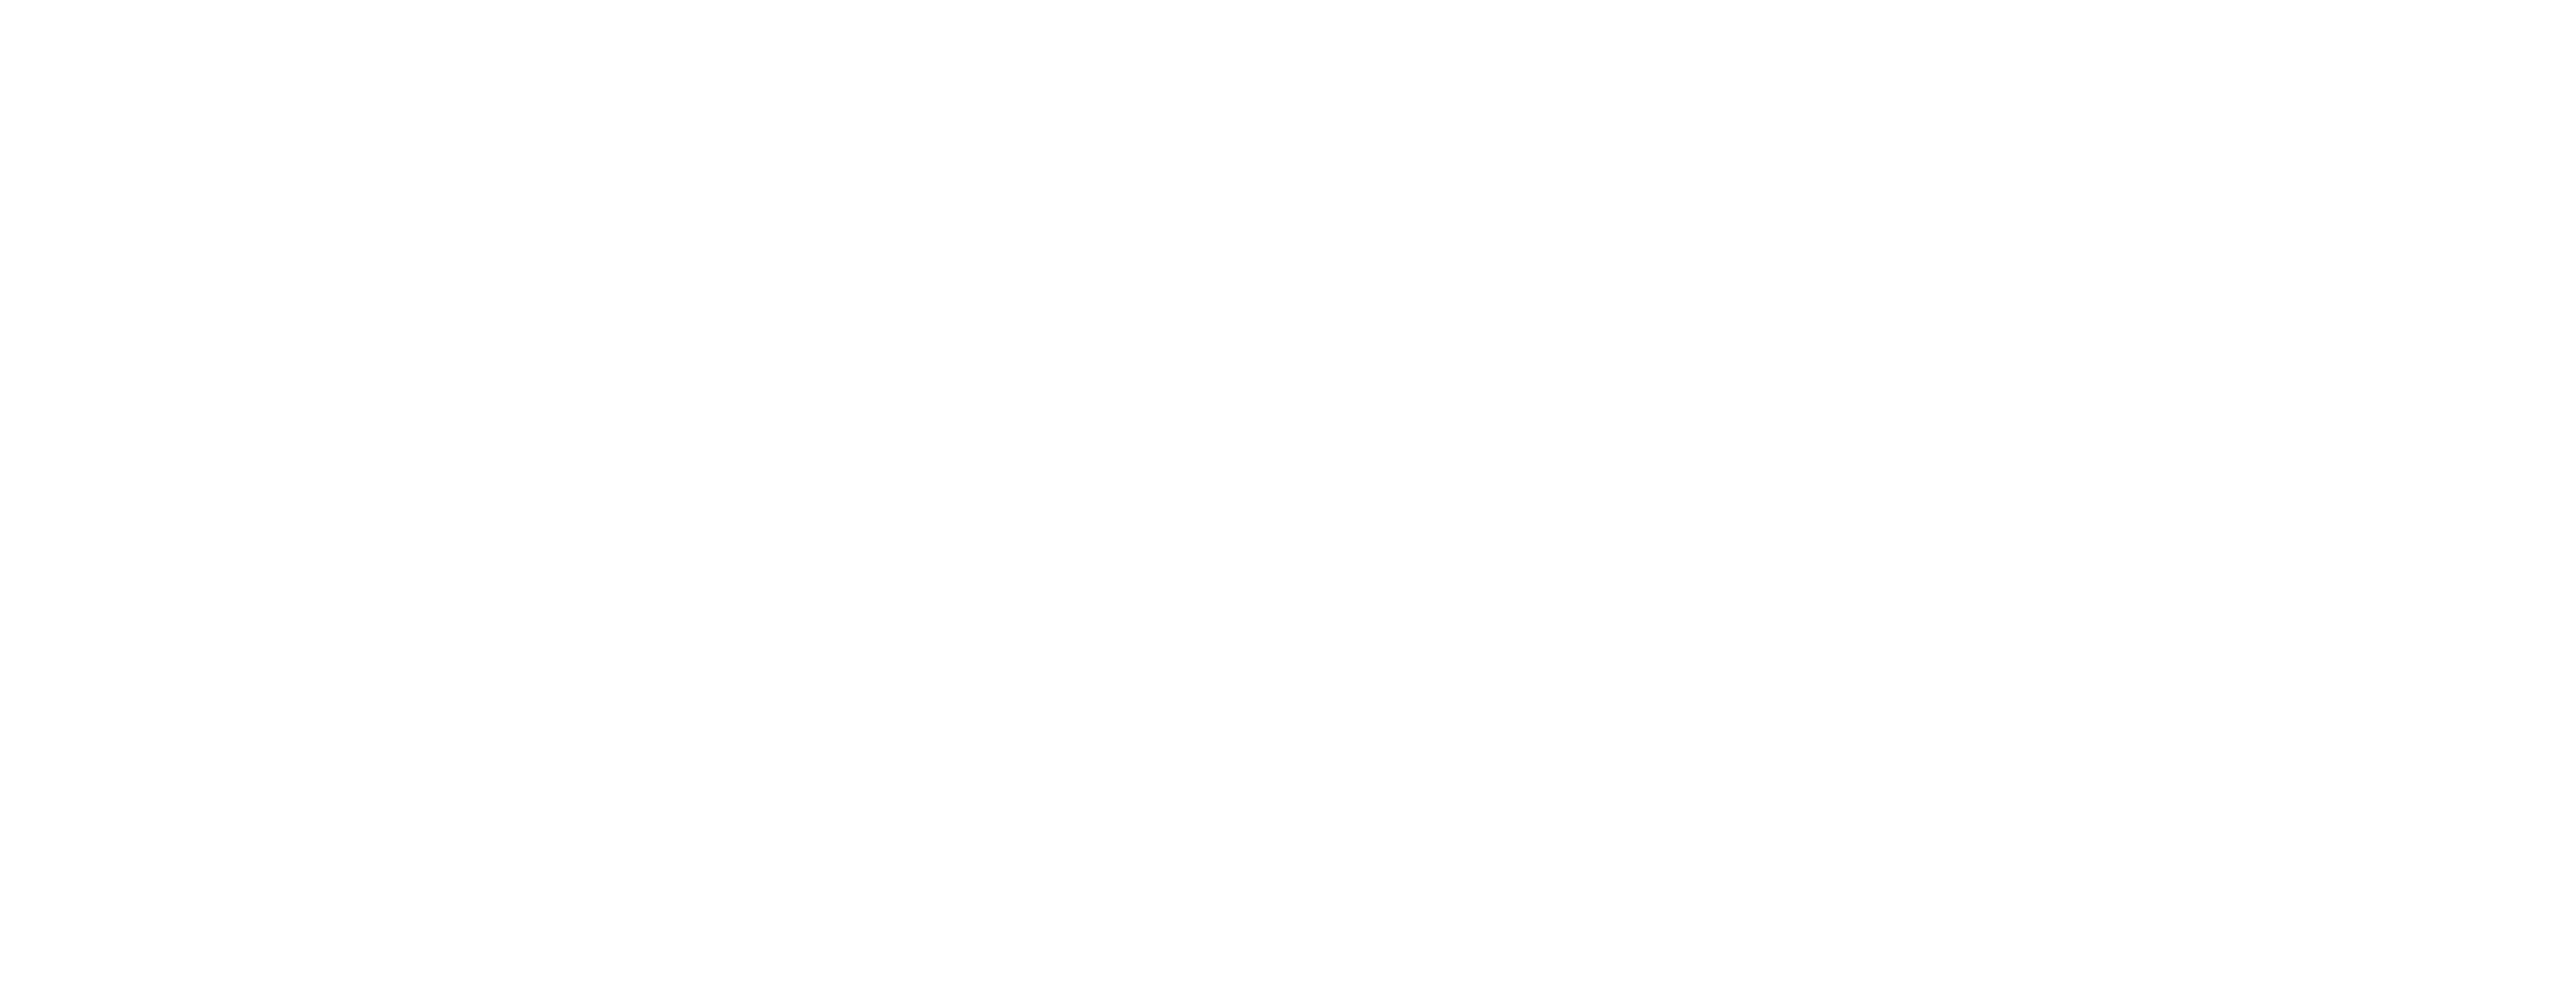 Stratton Castle: Tale of Jessie Goldenheart logo